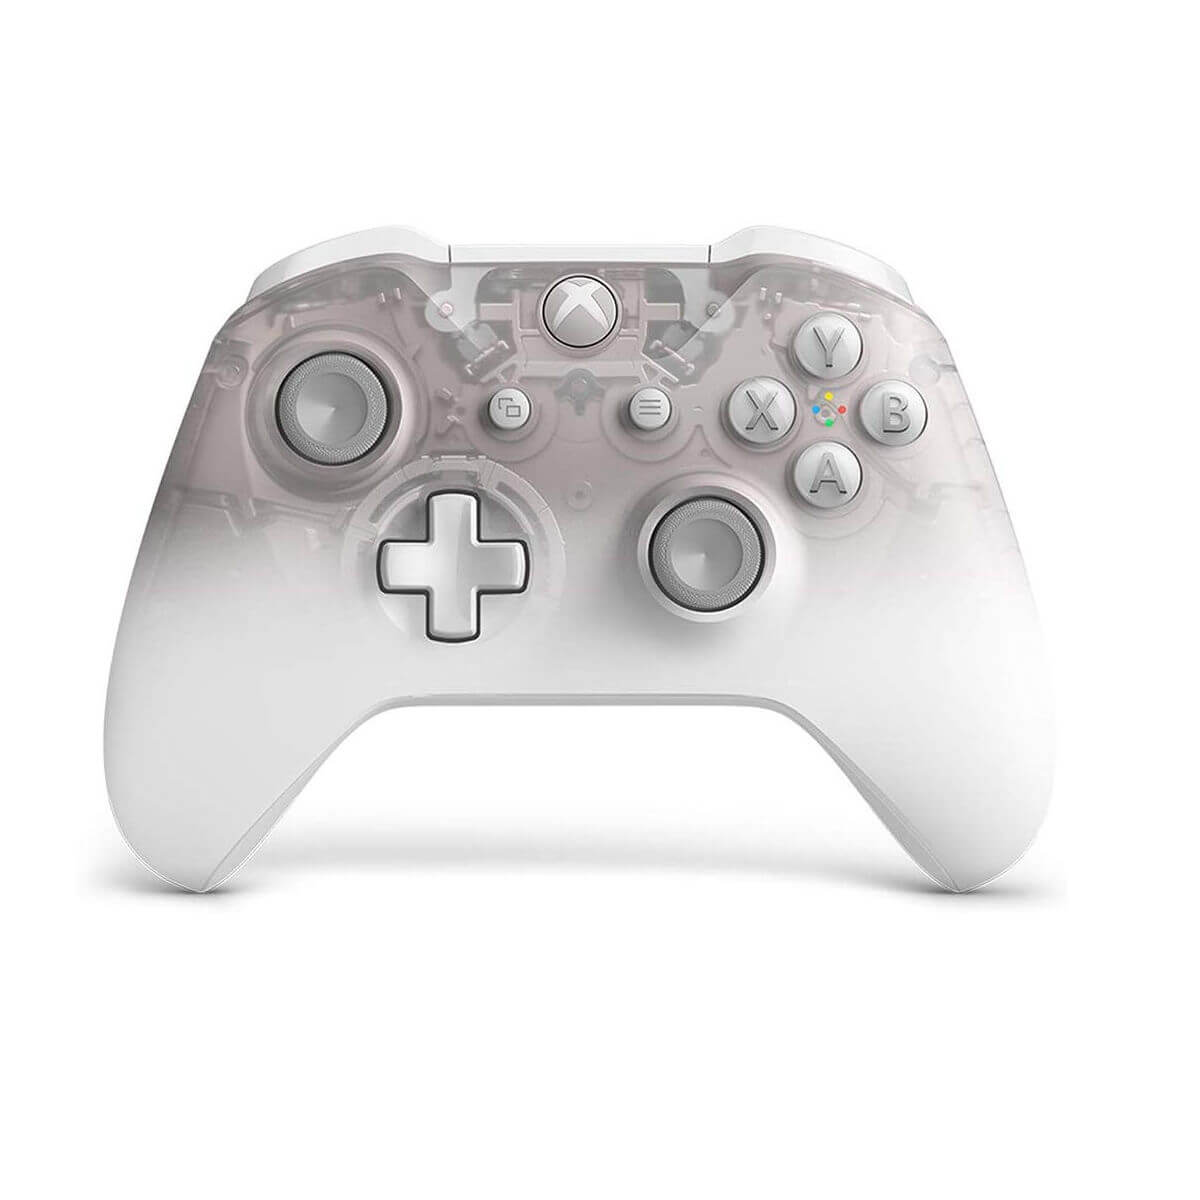 Phantom White Special Edition Xbox One controller